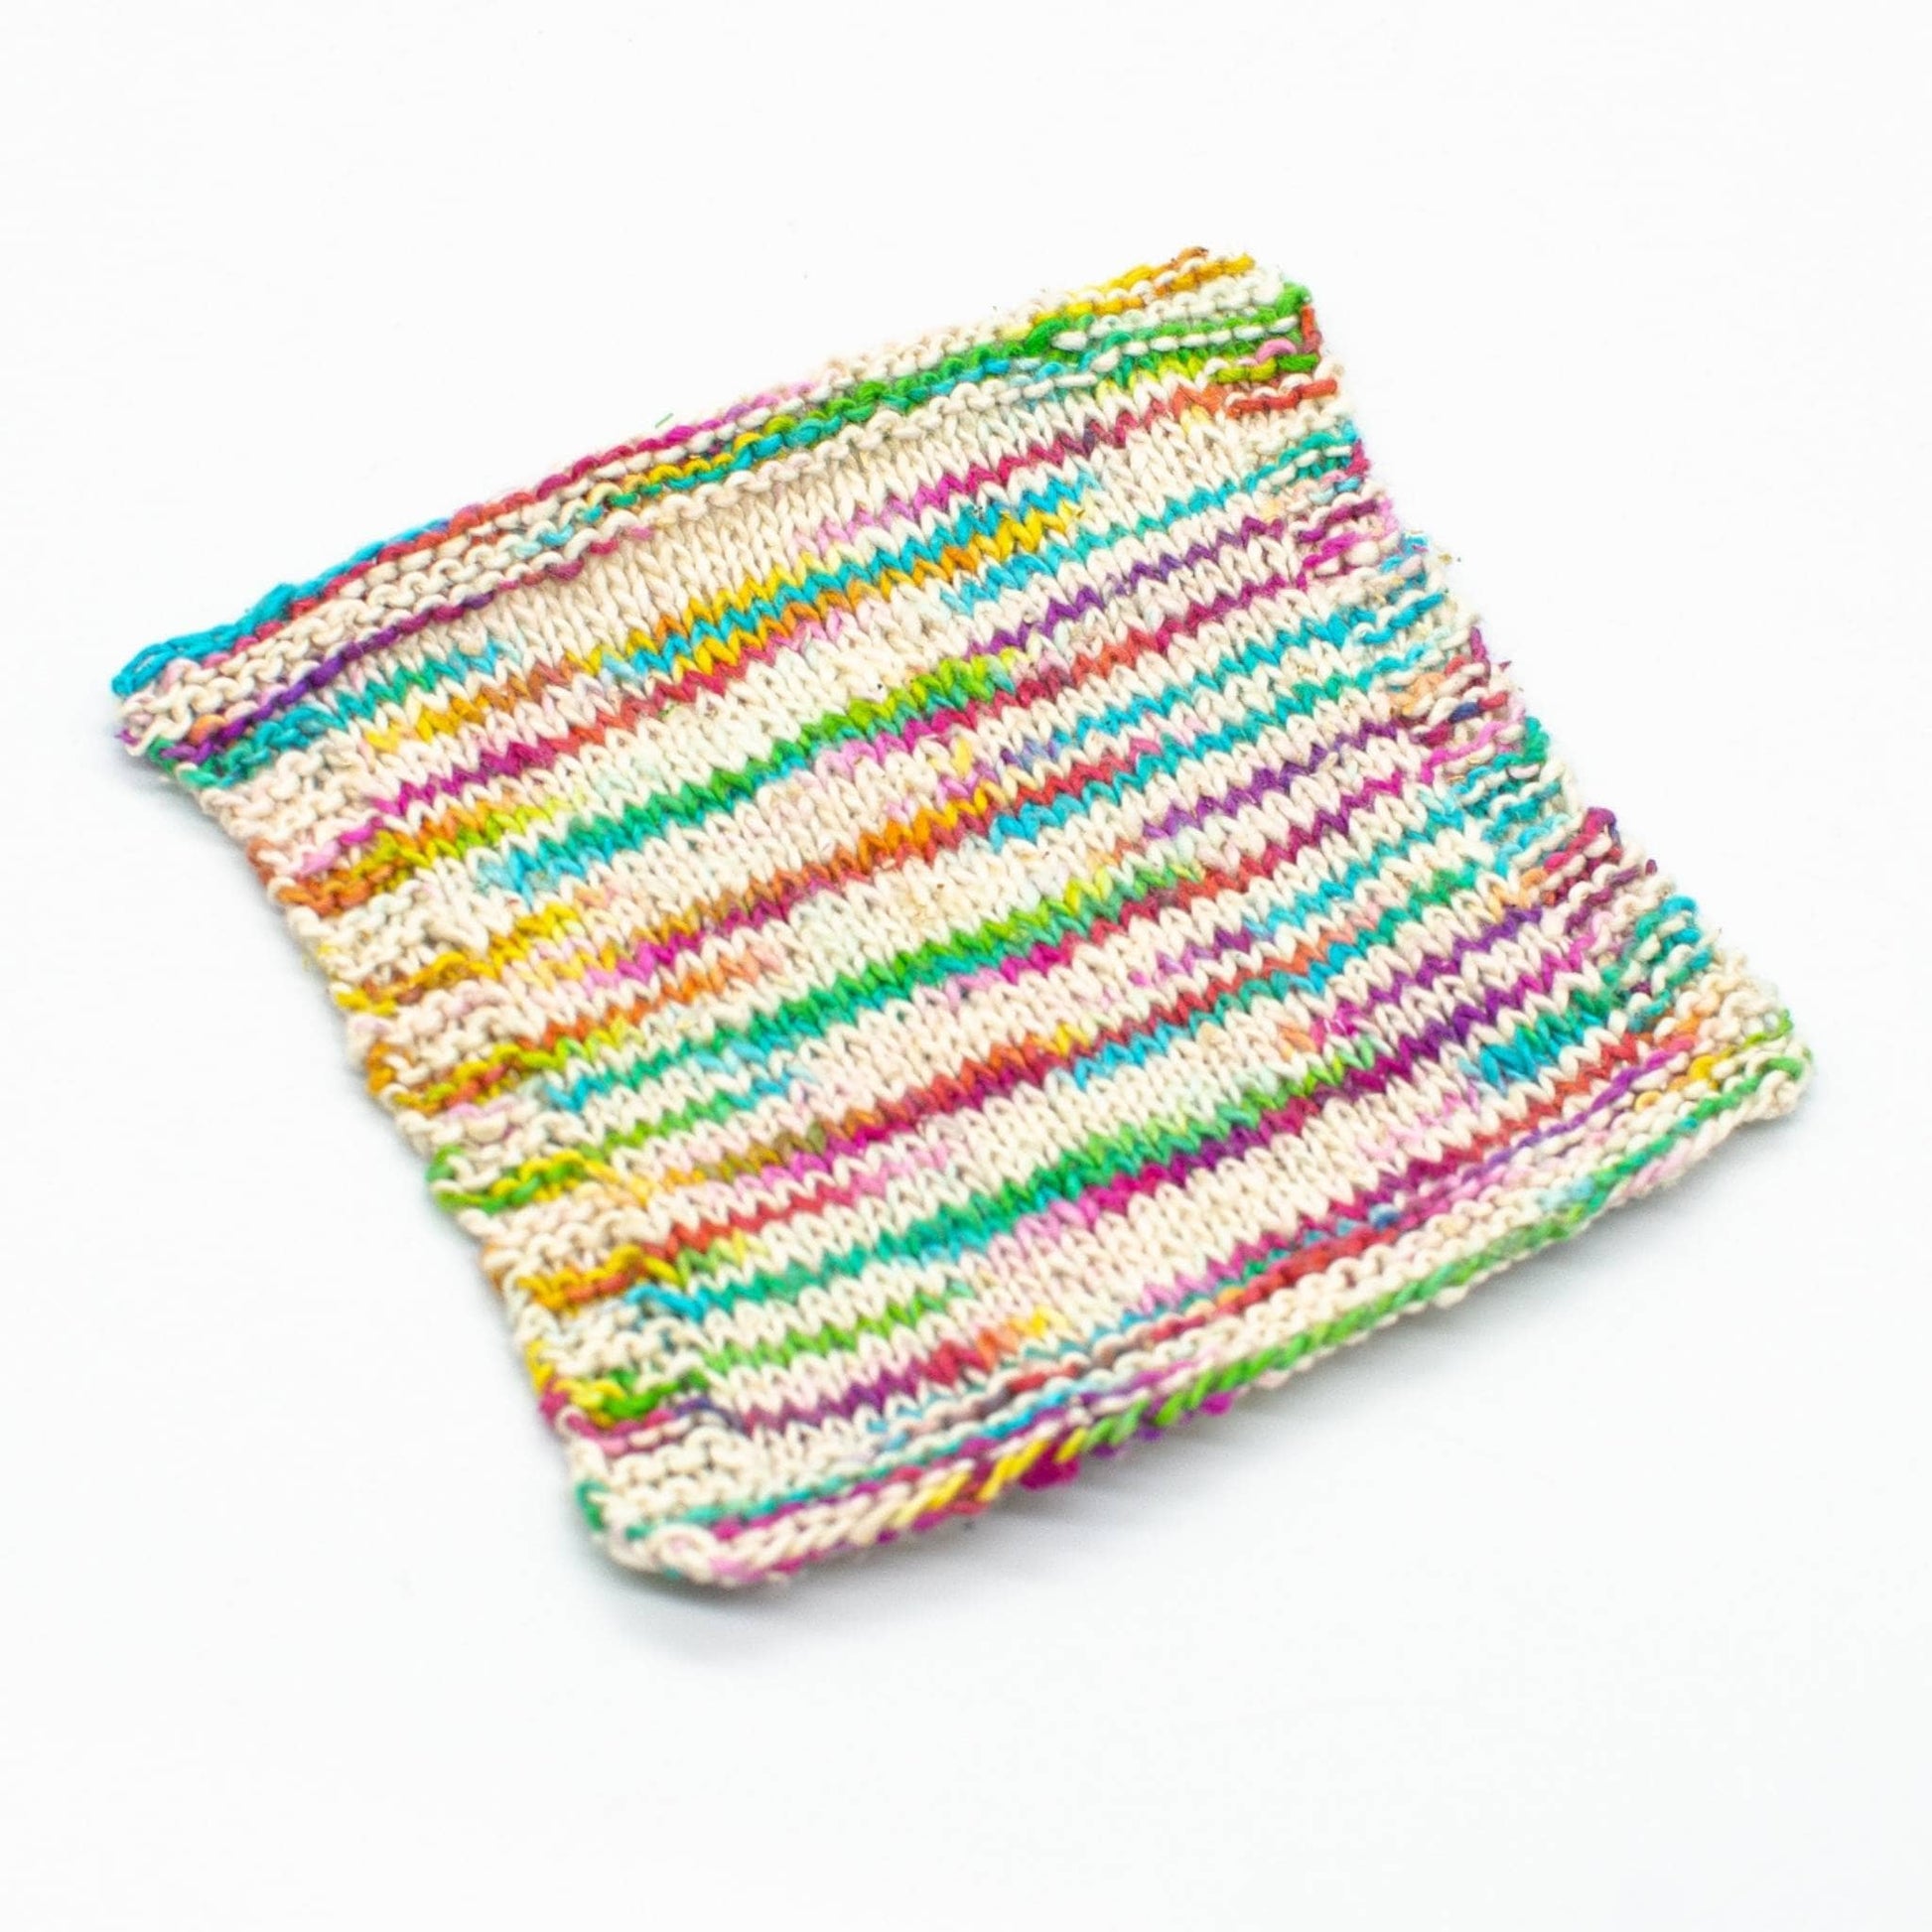 knit swatch of unicorn cloud peek a boo lace weight silk yarn (white and rainbow)